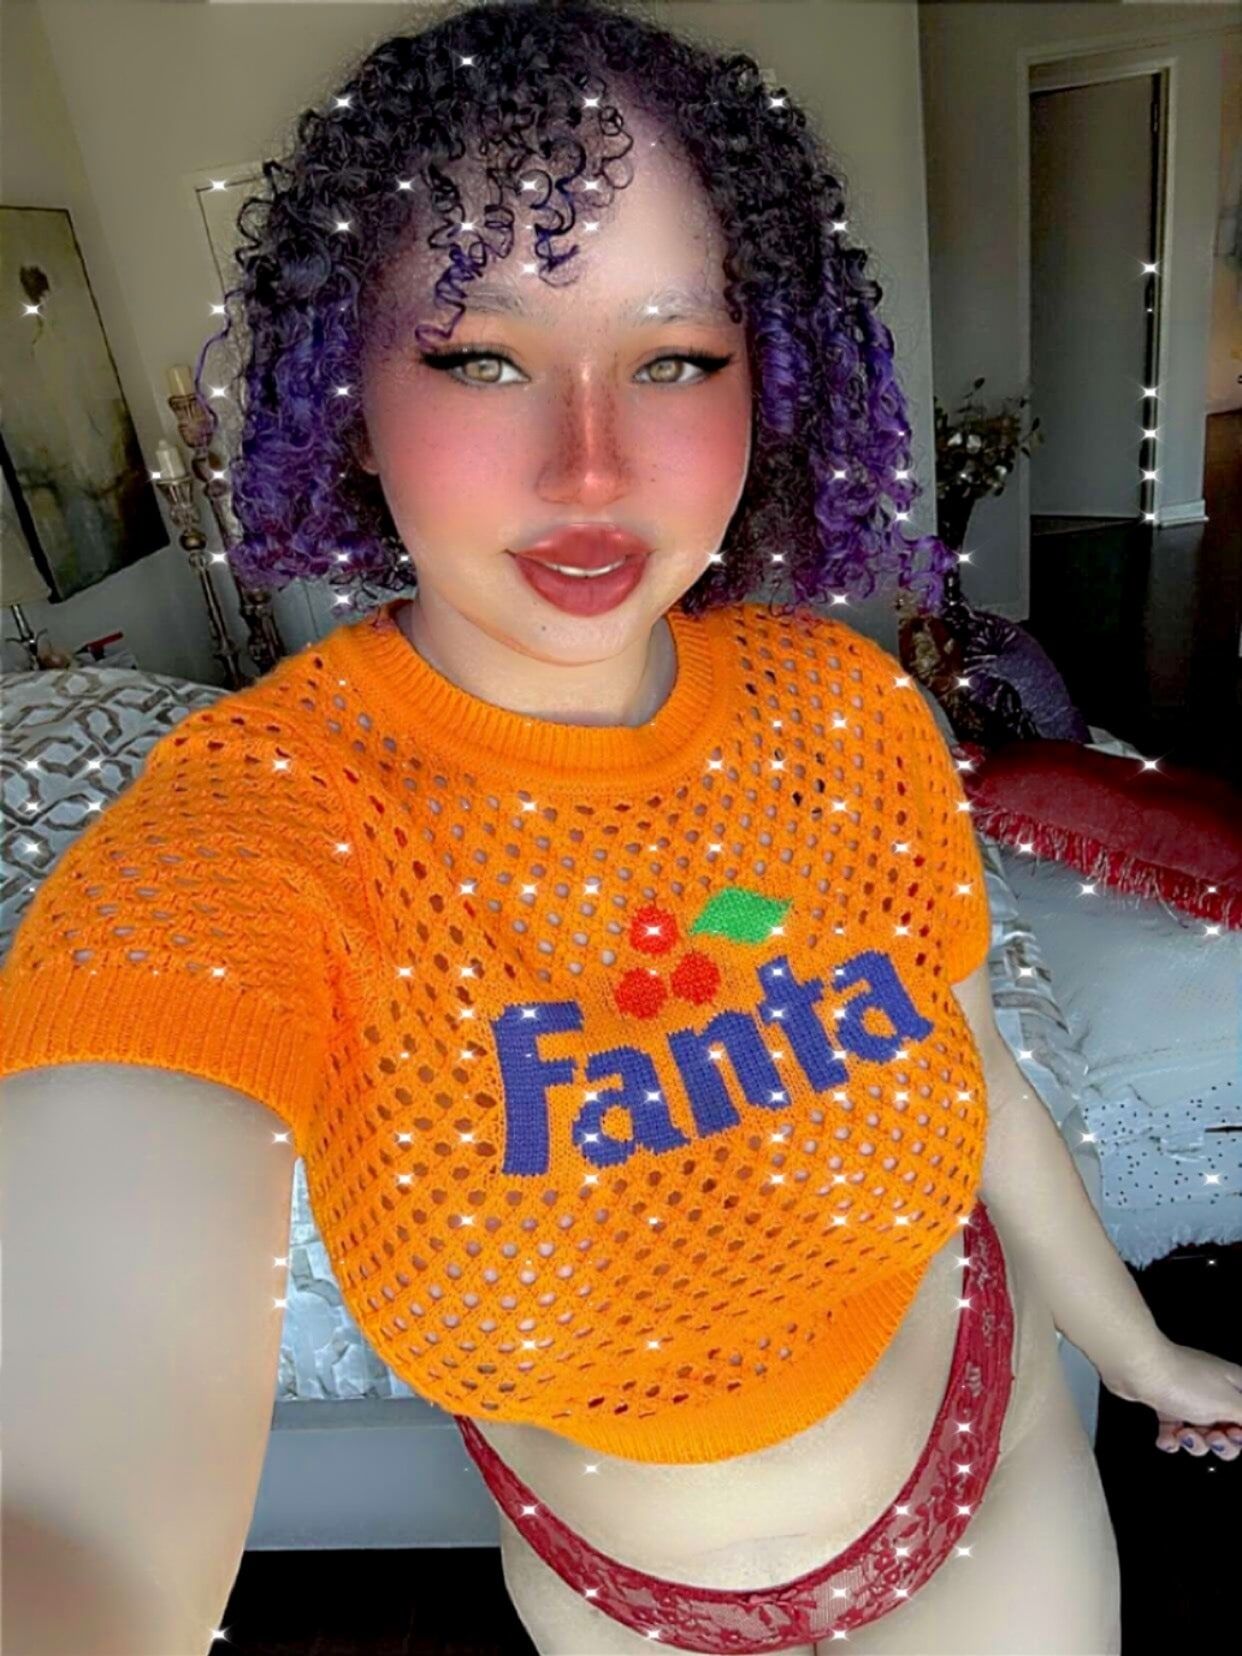 Big Tiddy Orange Fanta Girl Aamira Ardalan